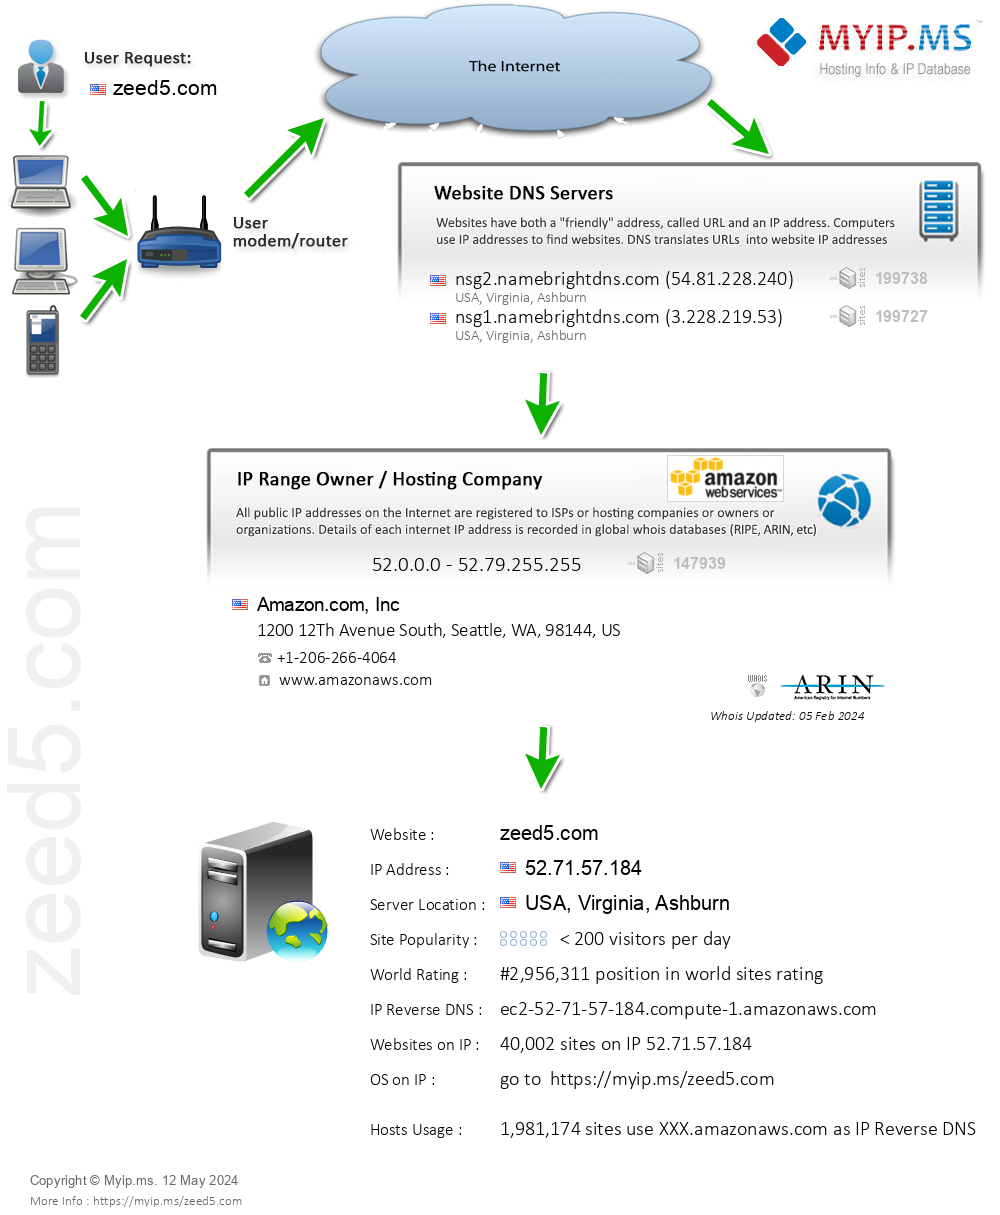 Zeed5.com - Website Hosting Visual IP Diagram